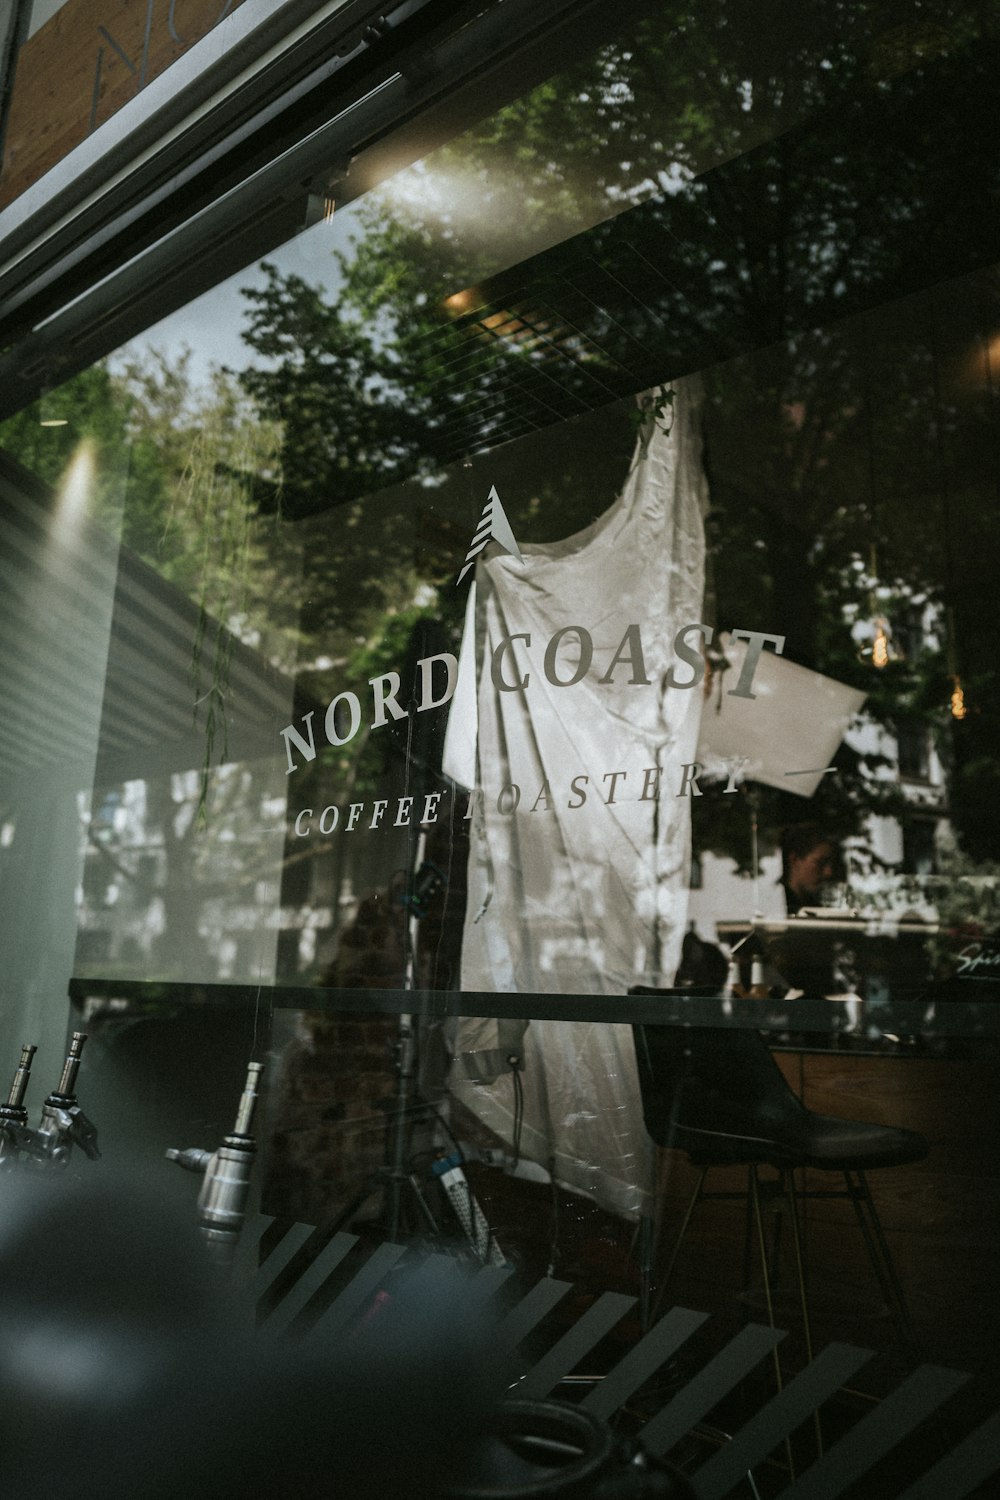 Nordcoast Coffee & Steak window